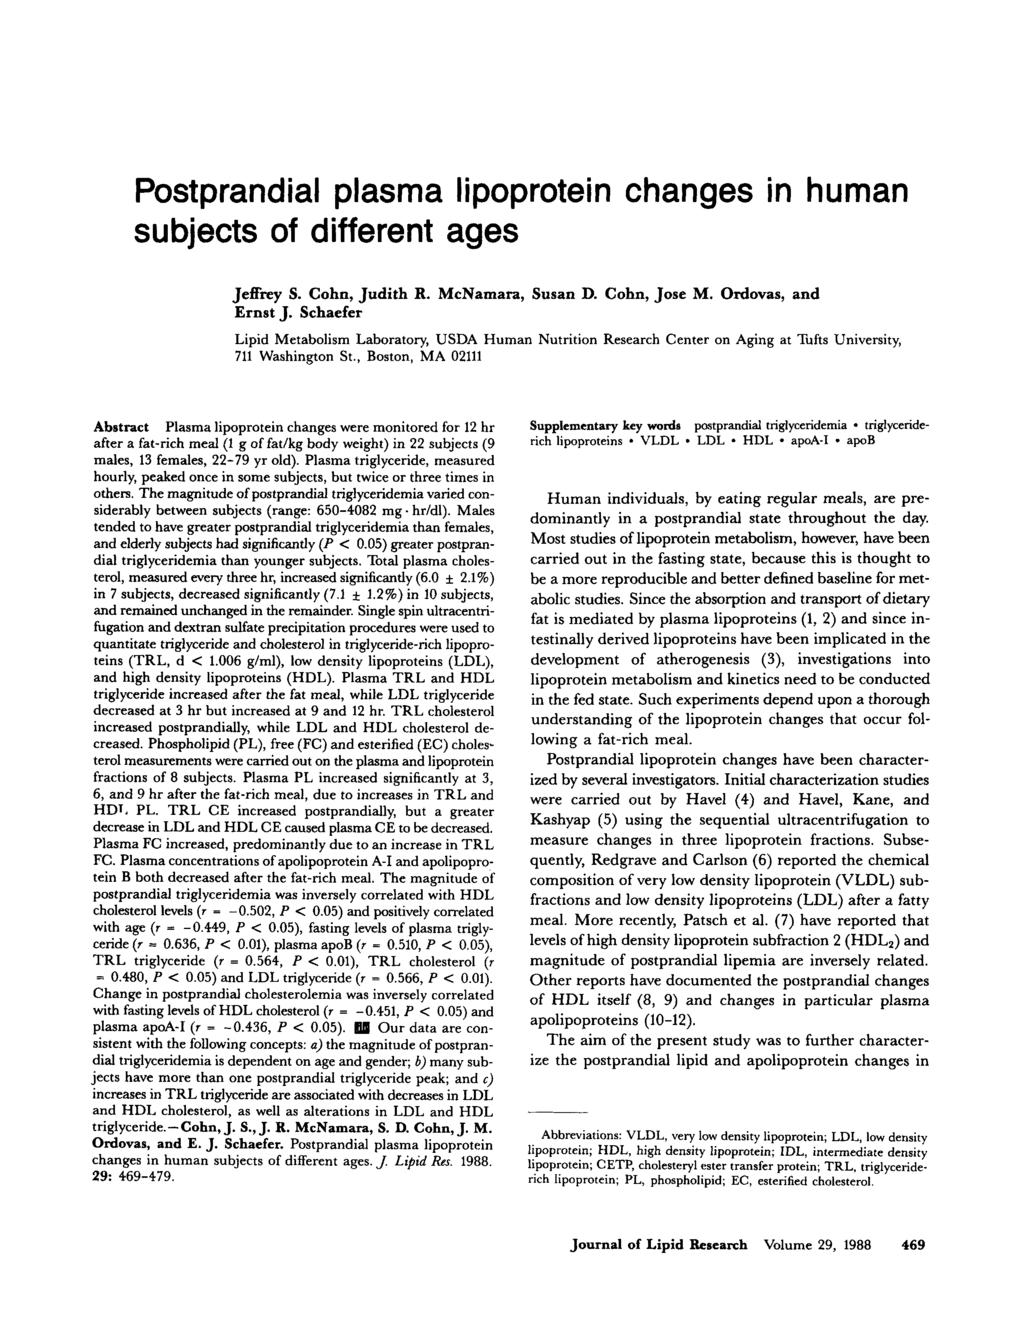 Postprandial plasma lipoprotein changes in human subjects of different ages Jeffrey S. Cohn, Judith R. McNamara, Susan D. Cohn, Jose M. Ordovas, and Ernst J.